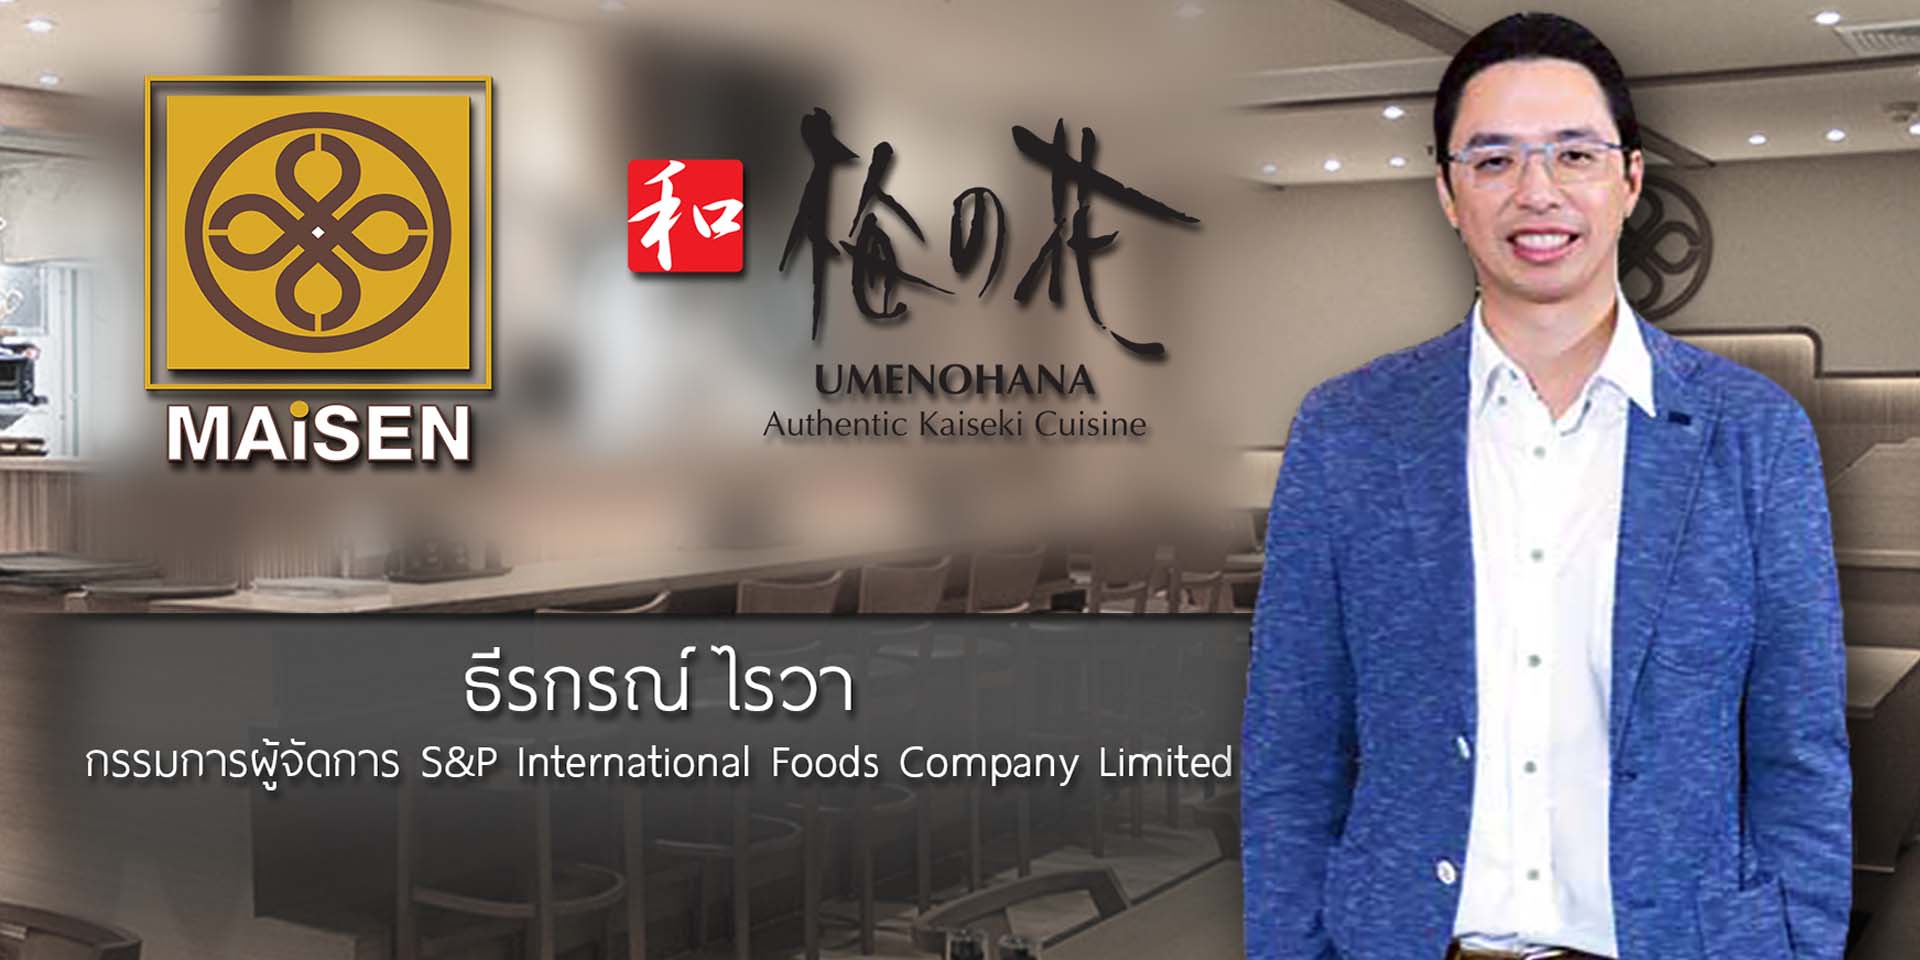 S&P International Foods Co.,Ltd. (Maisen), (Umenohana)